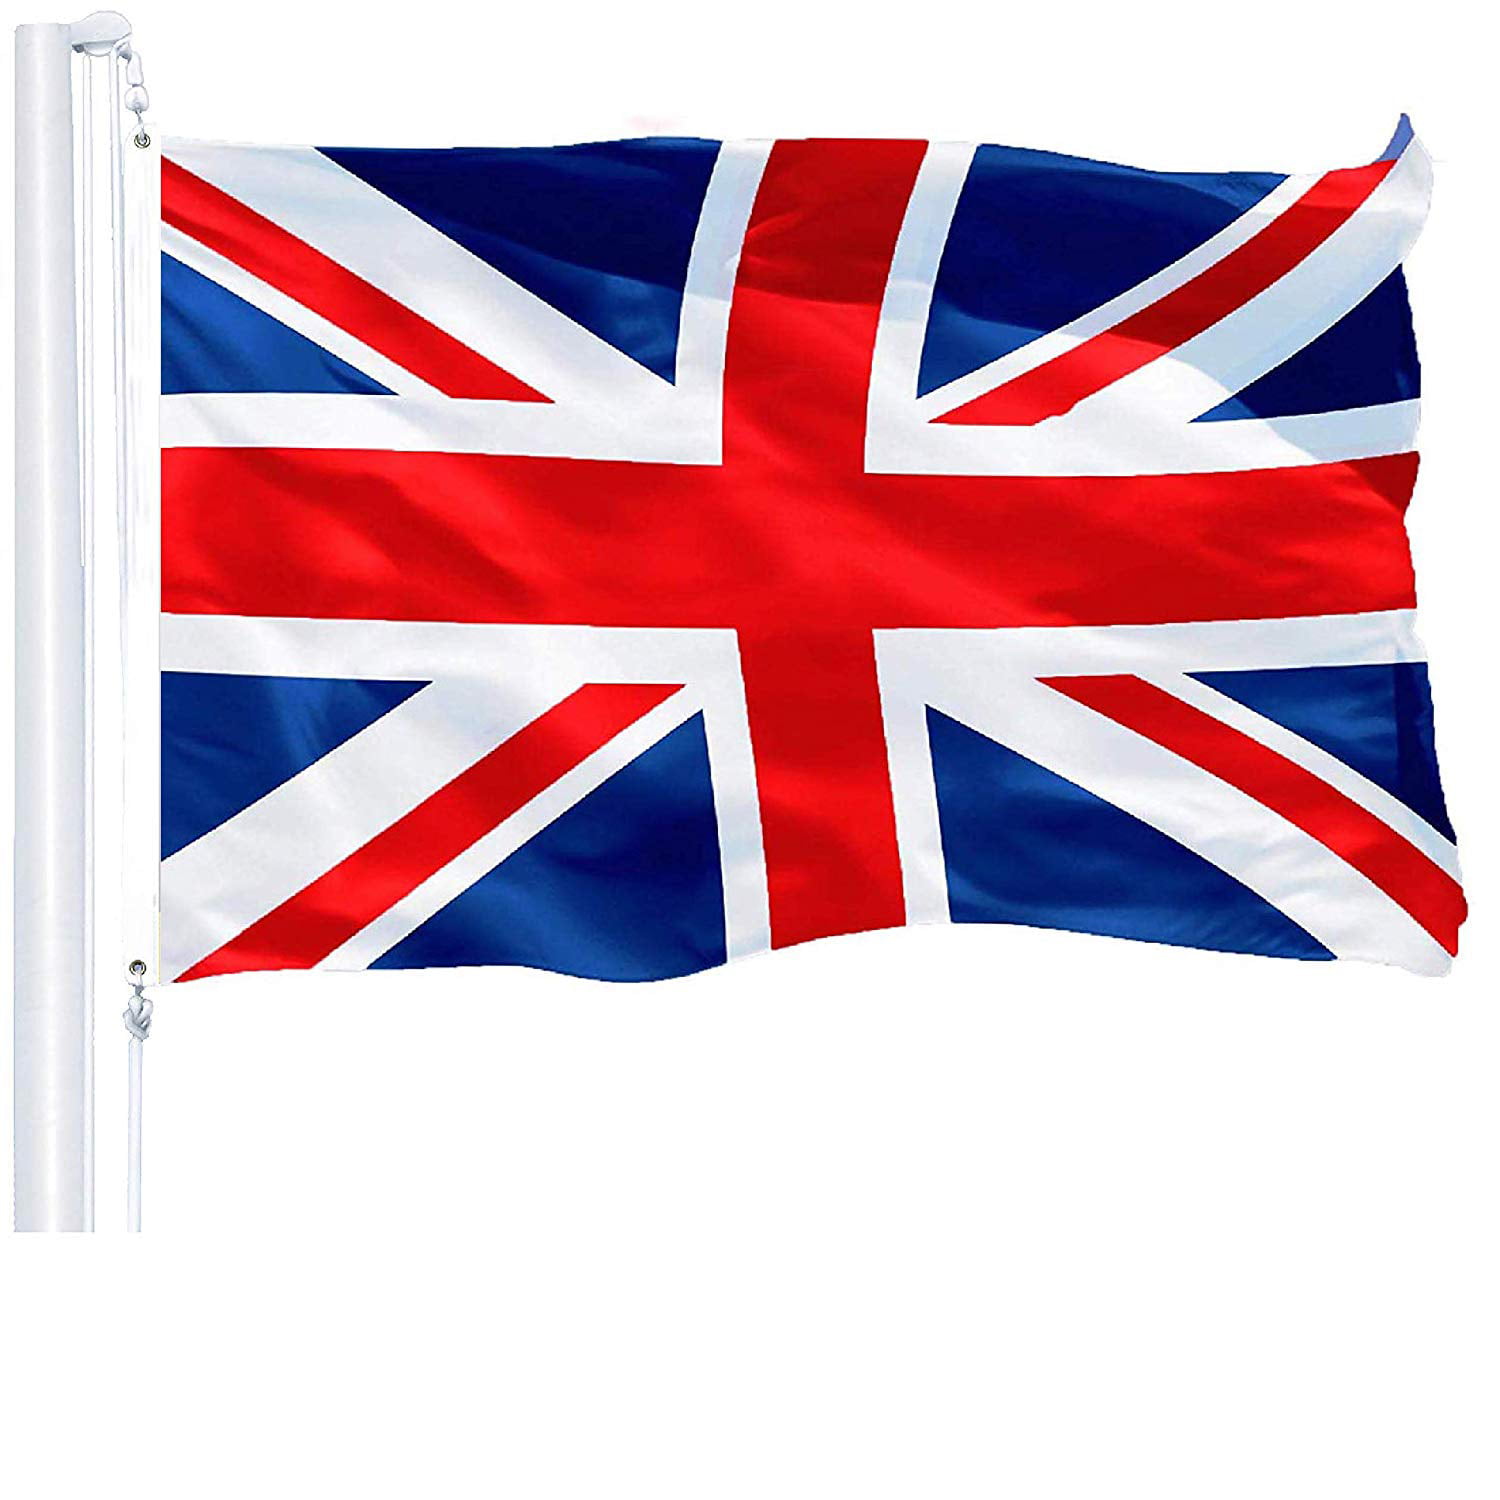 Federal Flags 3x5ft British Flag/Union Jack/UK Flag/United Kingdom Flag Outdoor Nylon from